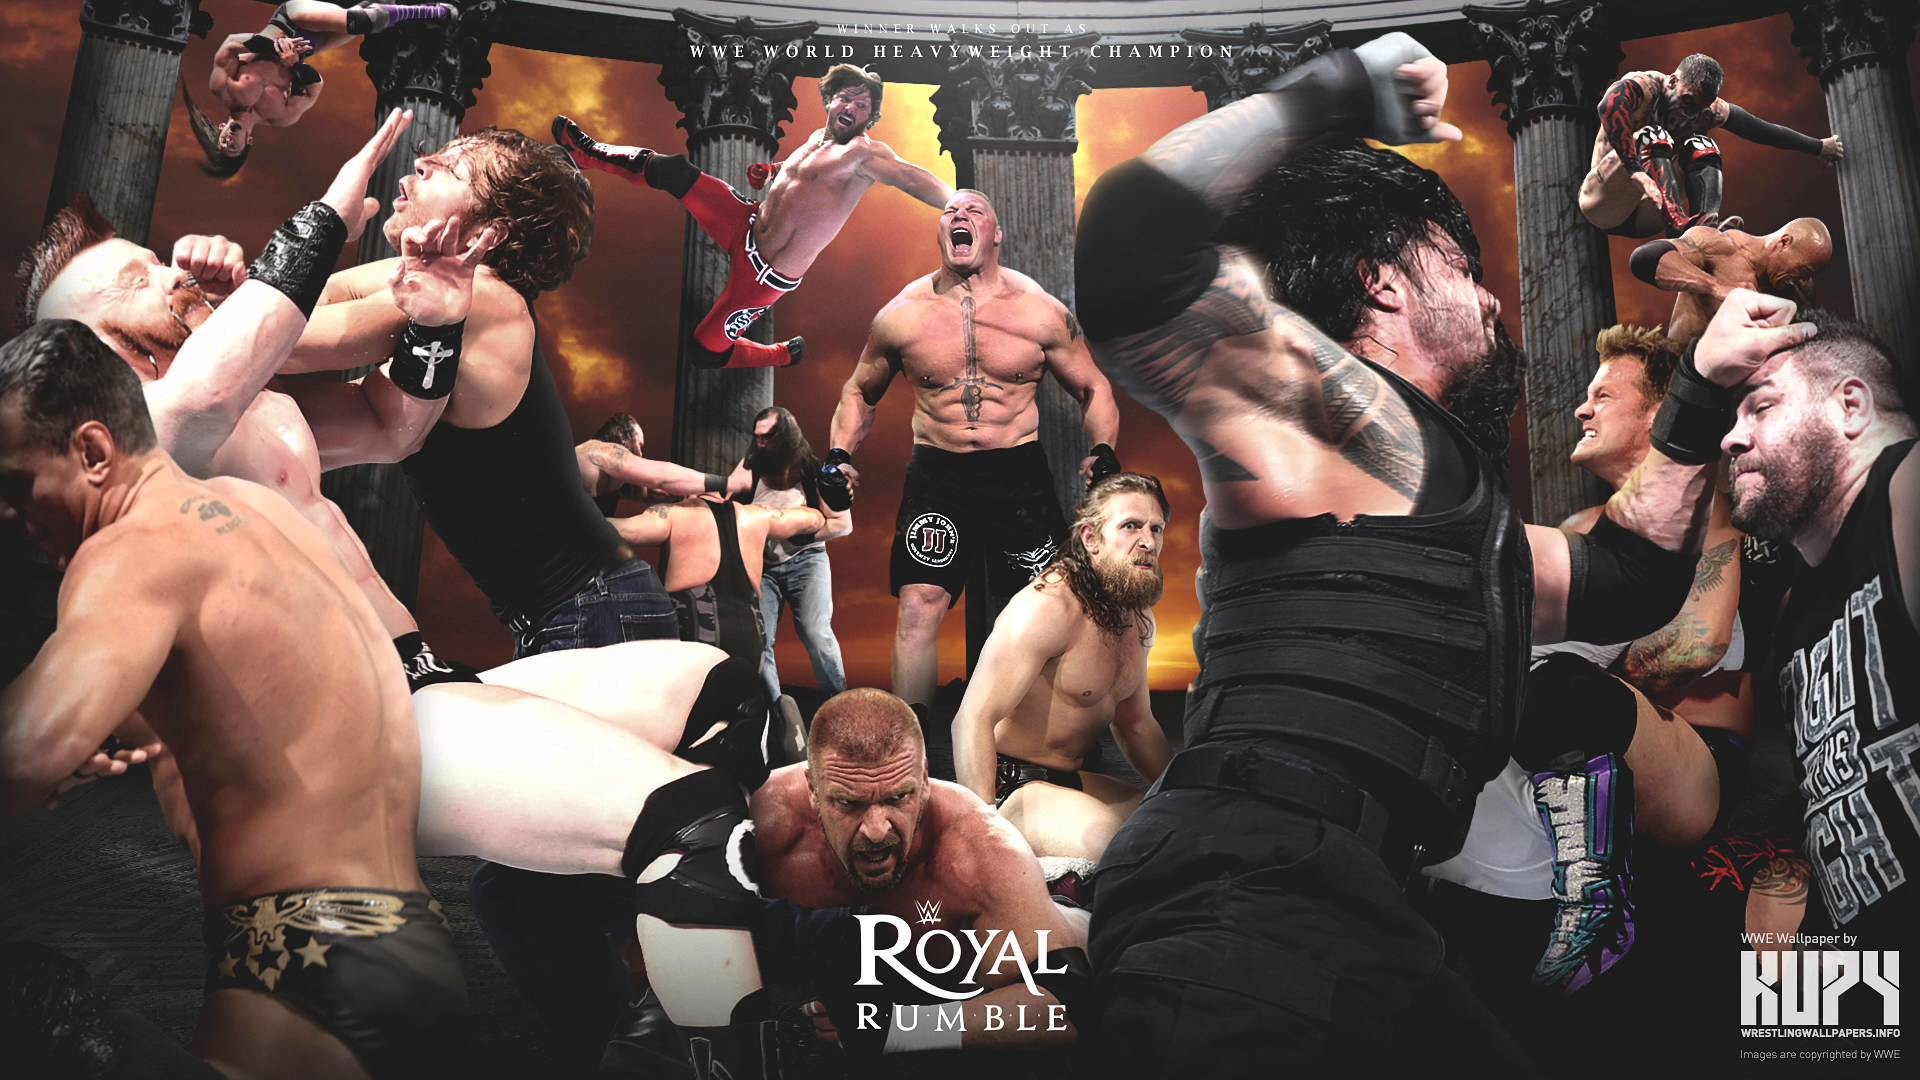 1920x1080 KupyWrestlingWallpapers.info - 2016 WWE Royal Rumble wallpaper - YouTube